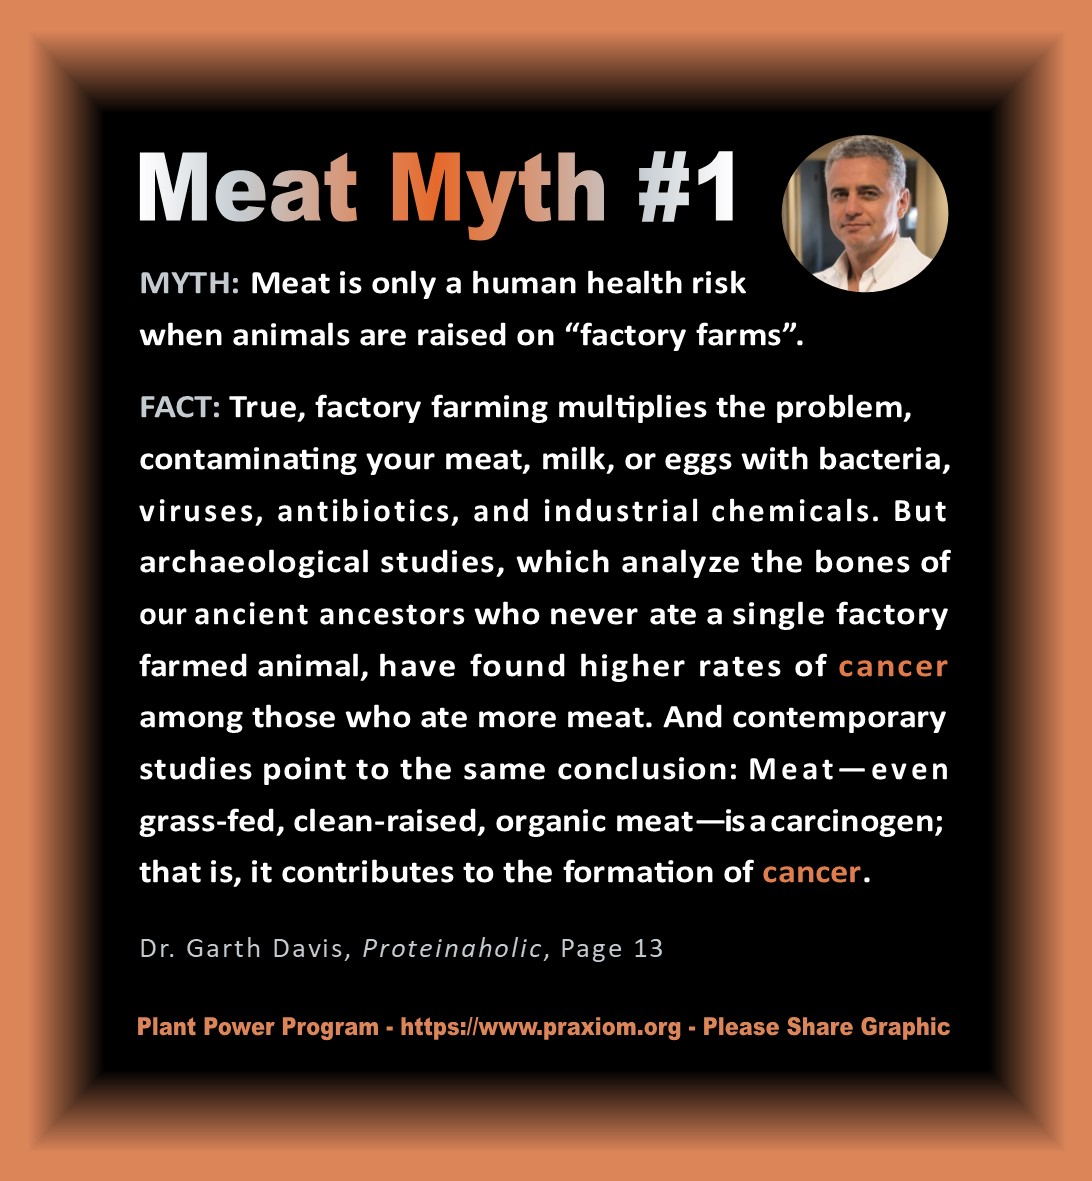 The Meat Myth - Dr. Garth Davis